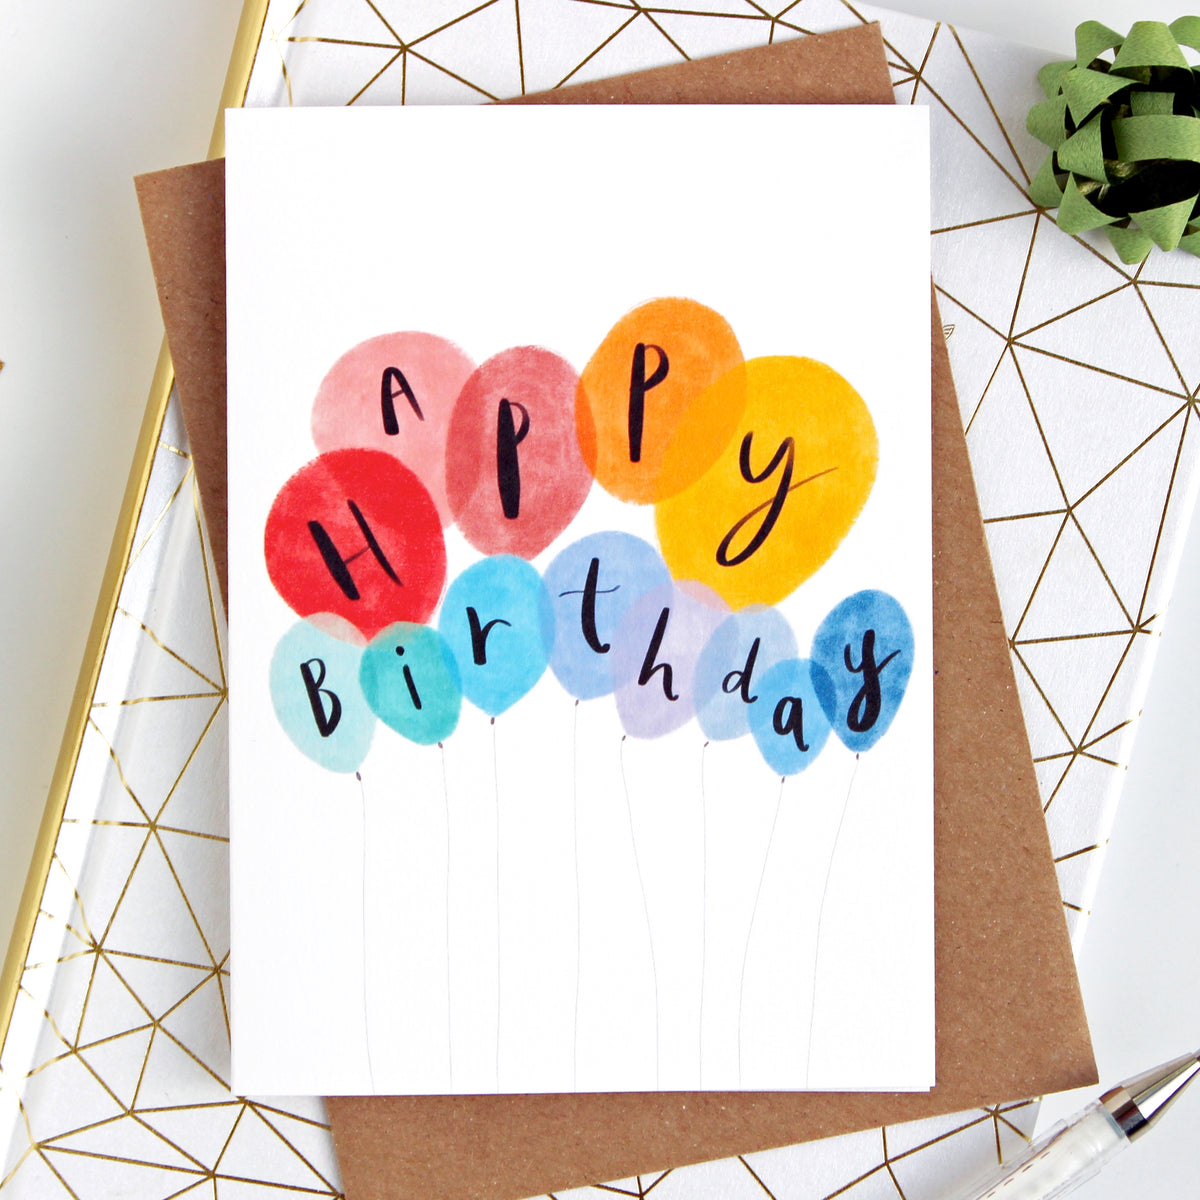 balloon-happy-birthday-card-katy-pillinger-designs